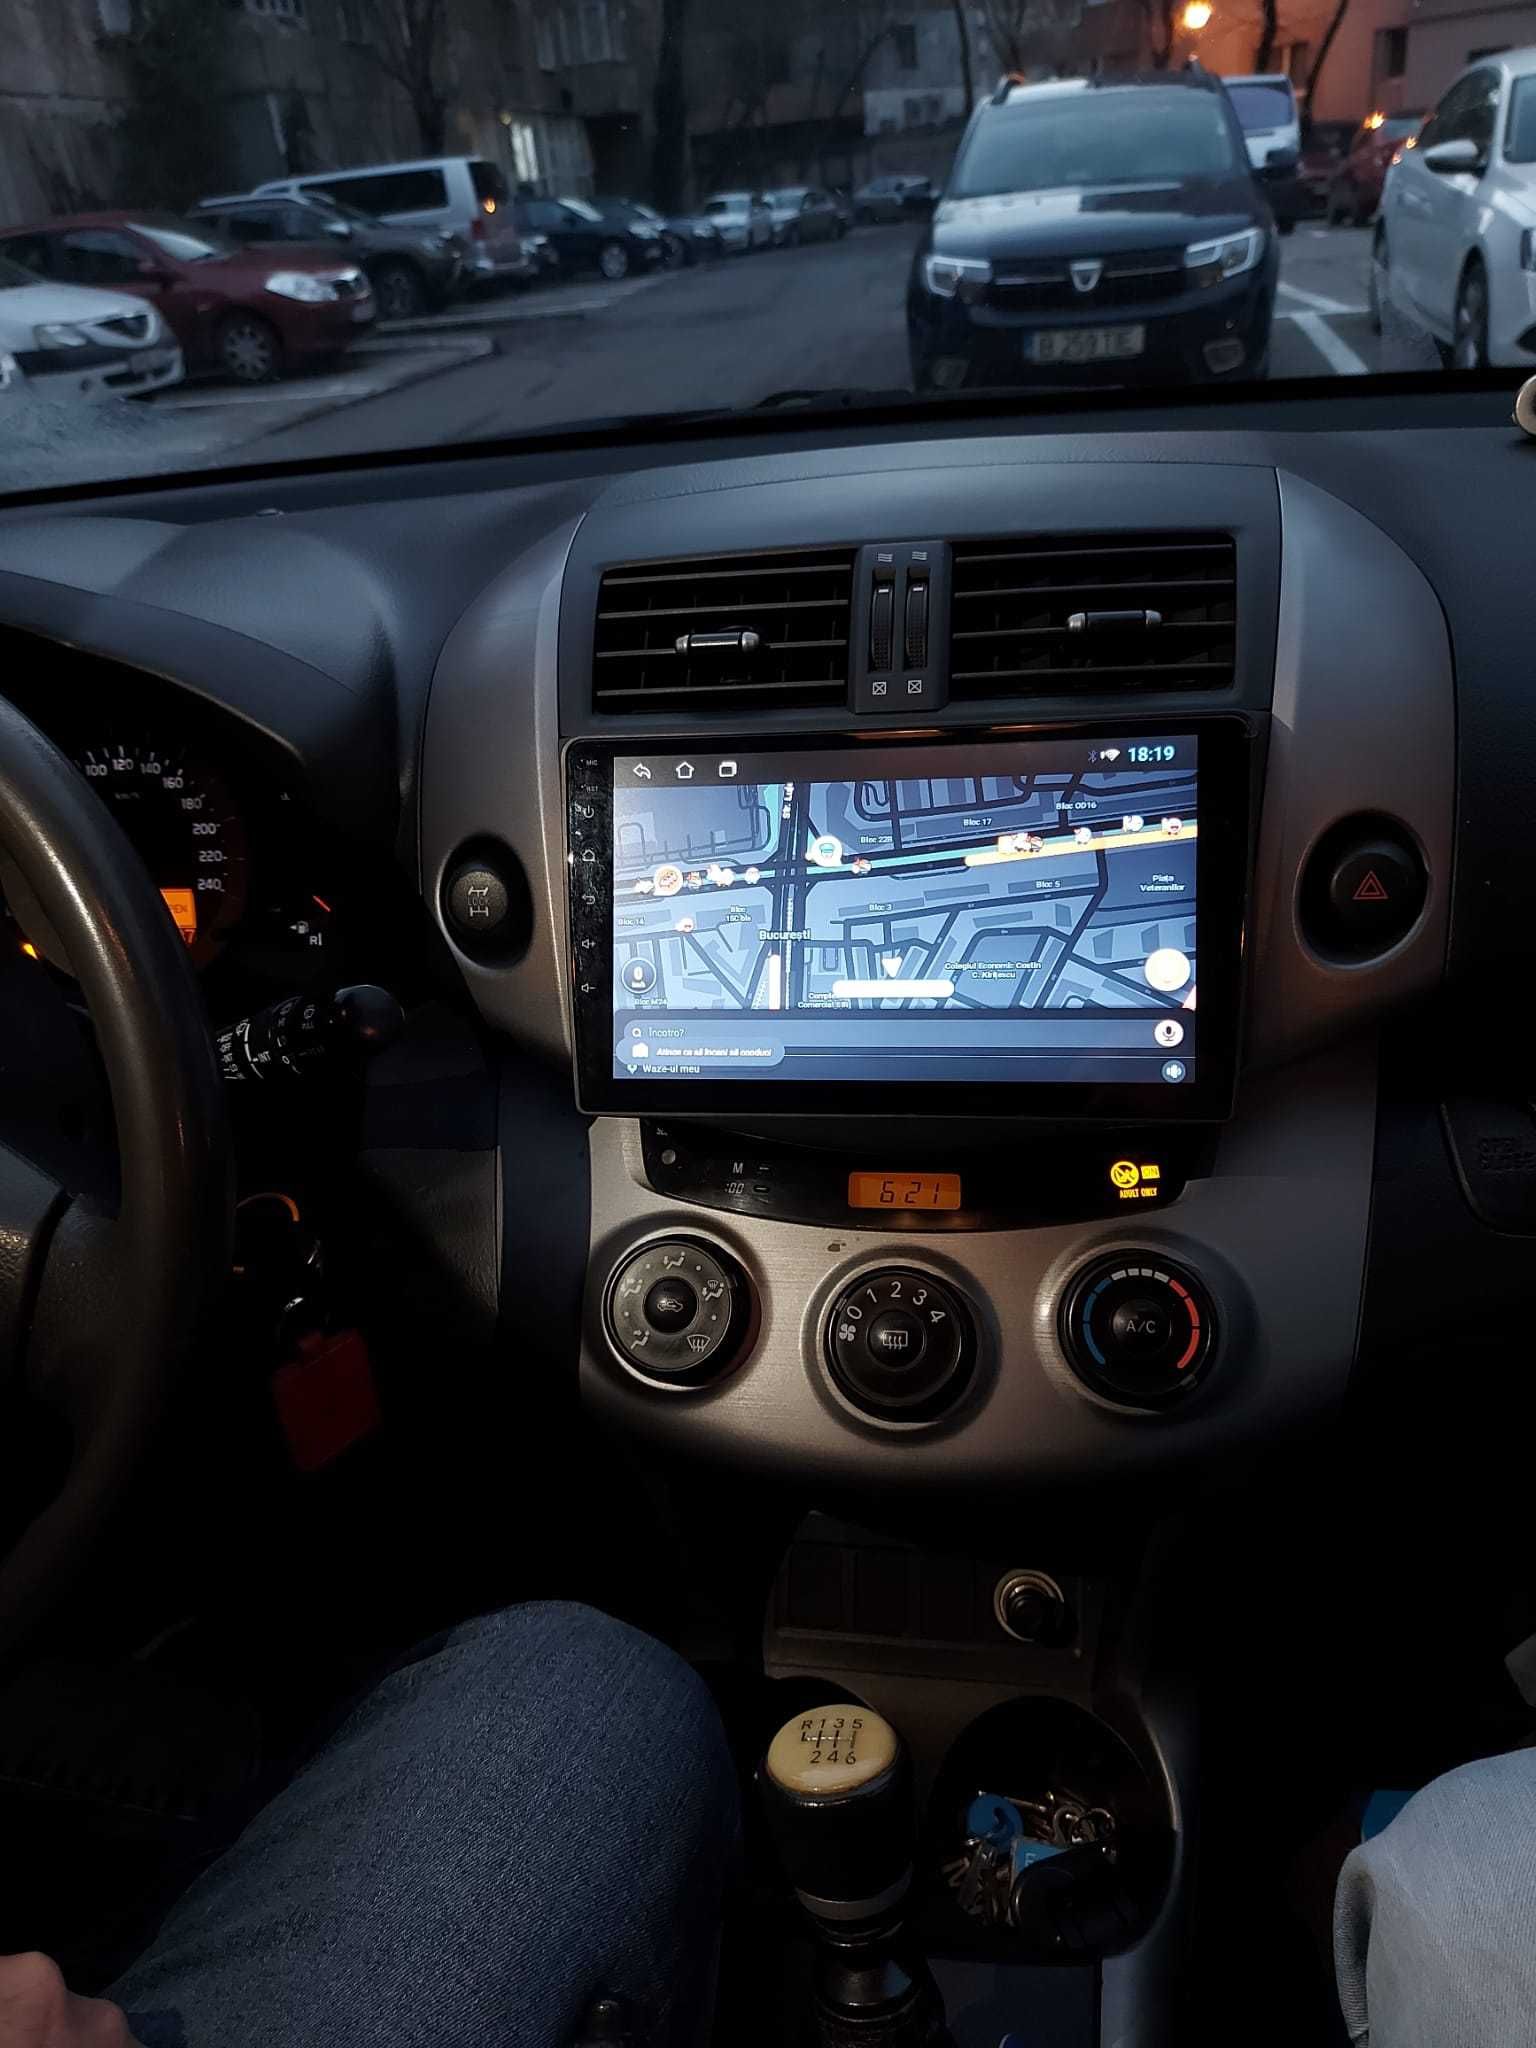 Navigatie Android Toyota RAV4 Waze YouTube GPS BT USB